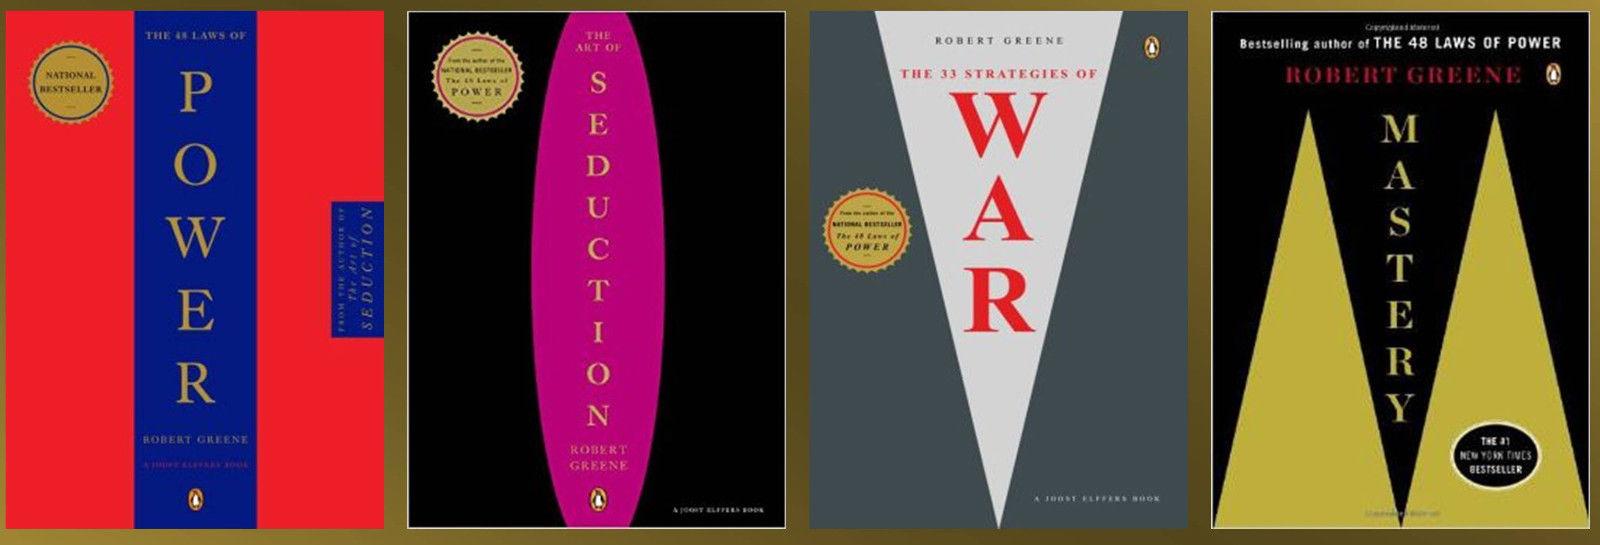 ROBERT GREENE LARGE TRADE Paperback Set of 4 POWER - SEDUCTION - WAR -  MASTERY by Greene, Robert: New